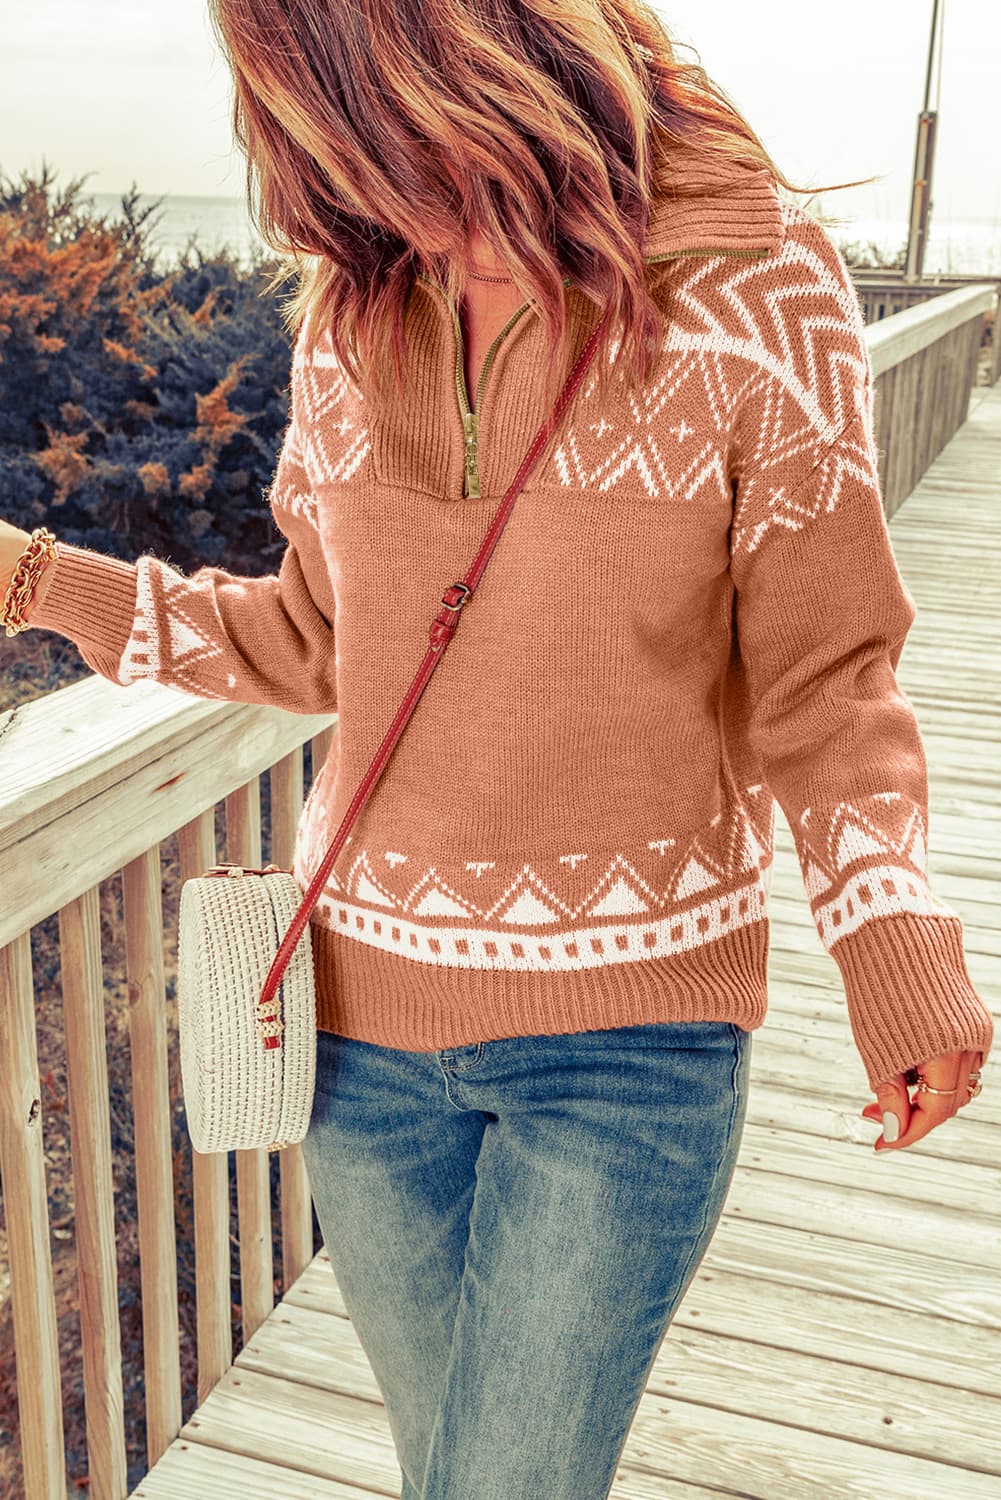 Zip-Up Mock Neck Dropped Shoulder Pullover Sweater - Online Only